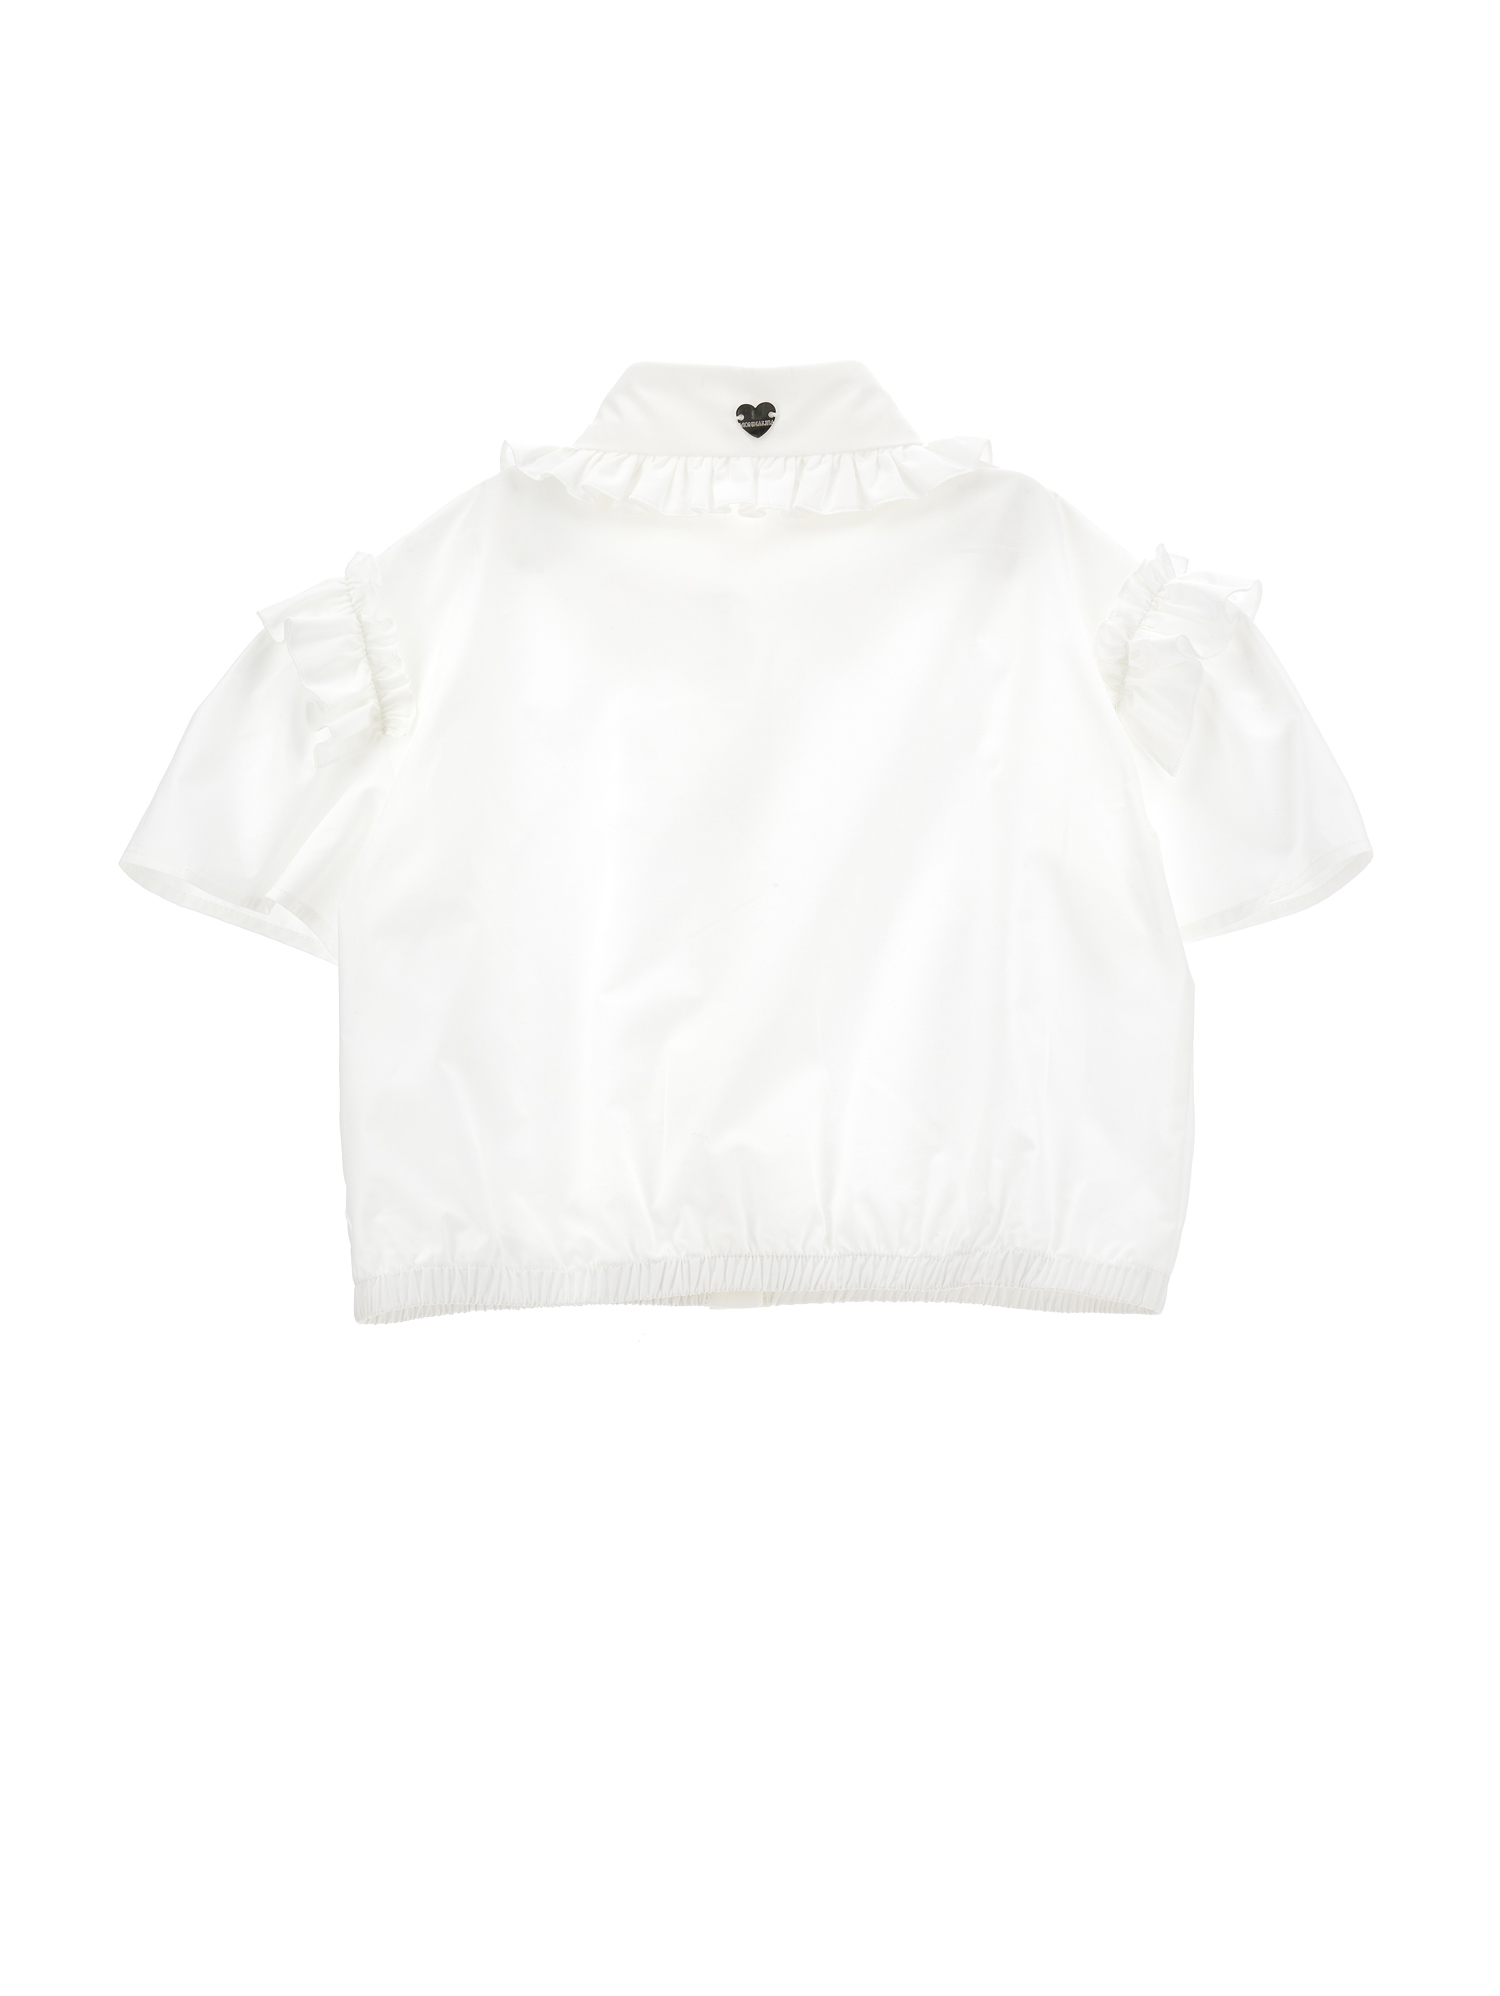 Shop Monnalisa Cotton Shirt With Gathering In Cream